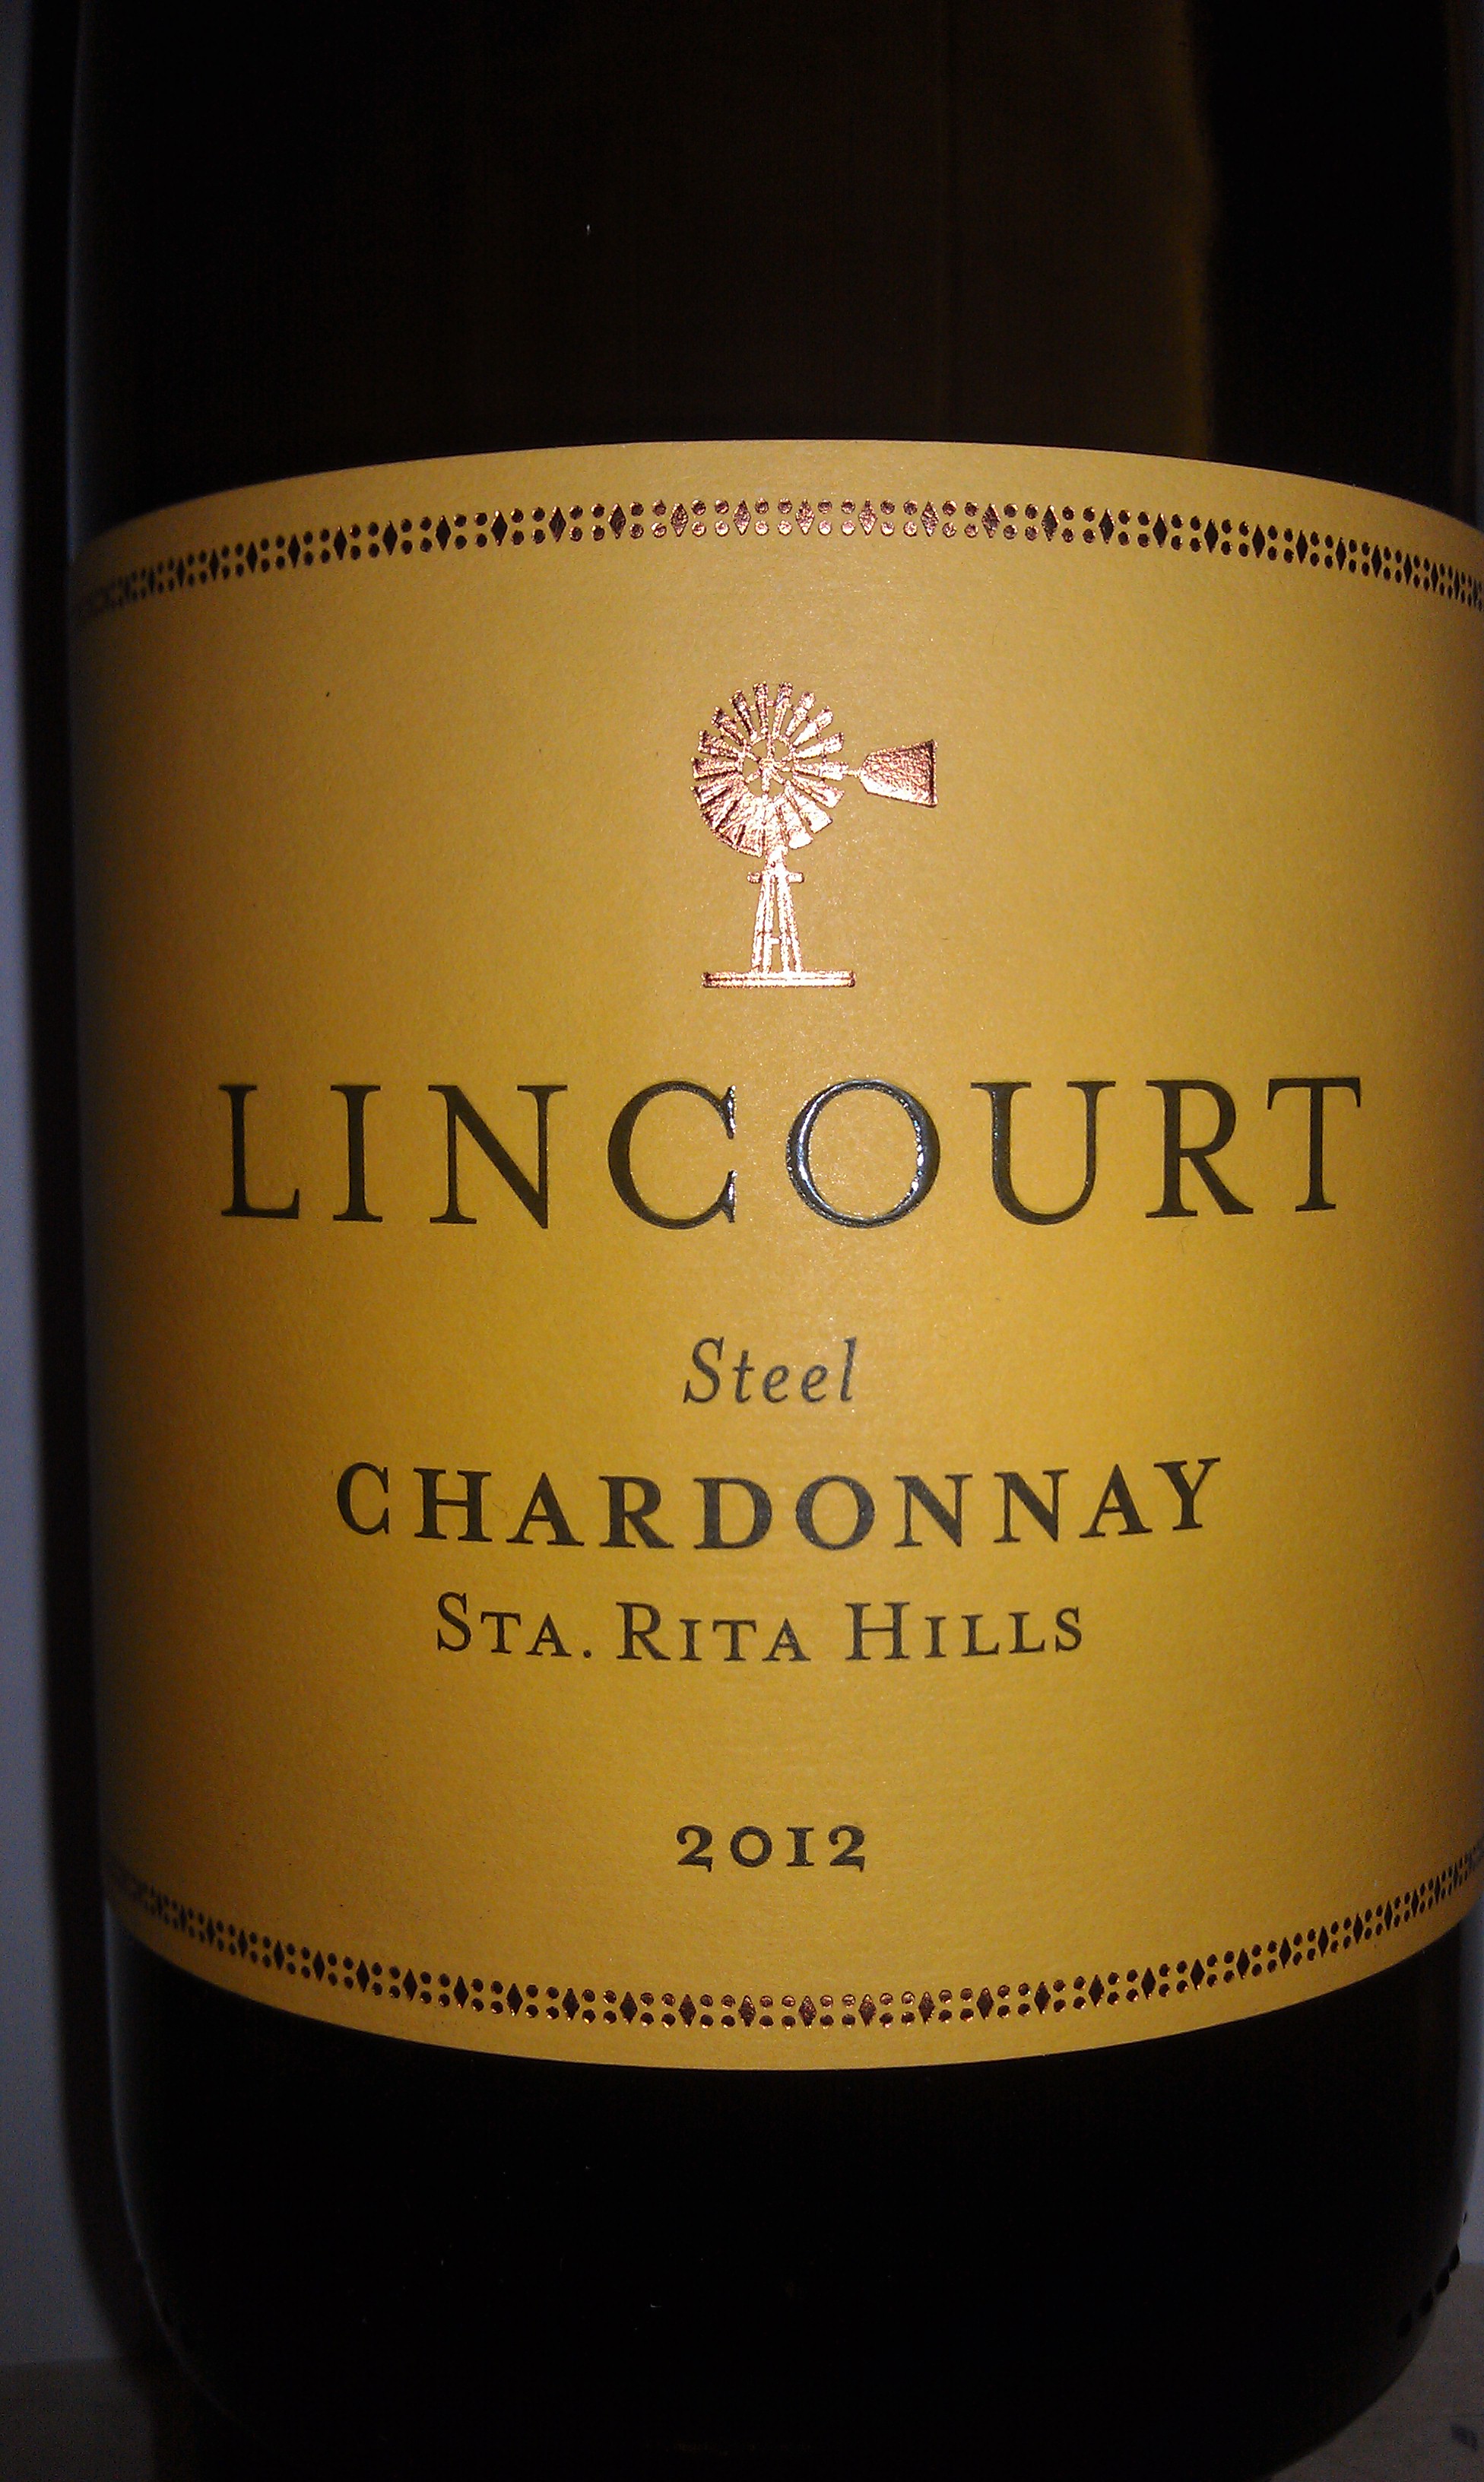 2012 Lincourt Chardonnay Steel Santa Rita Hills - click image for full description